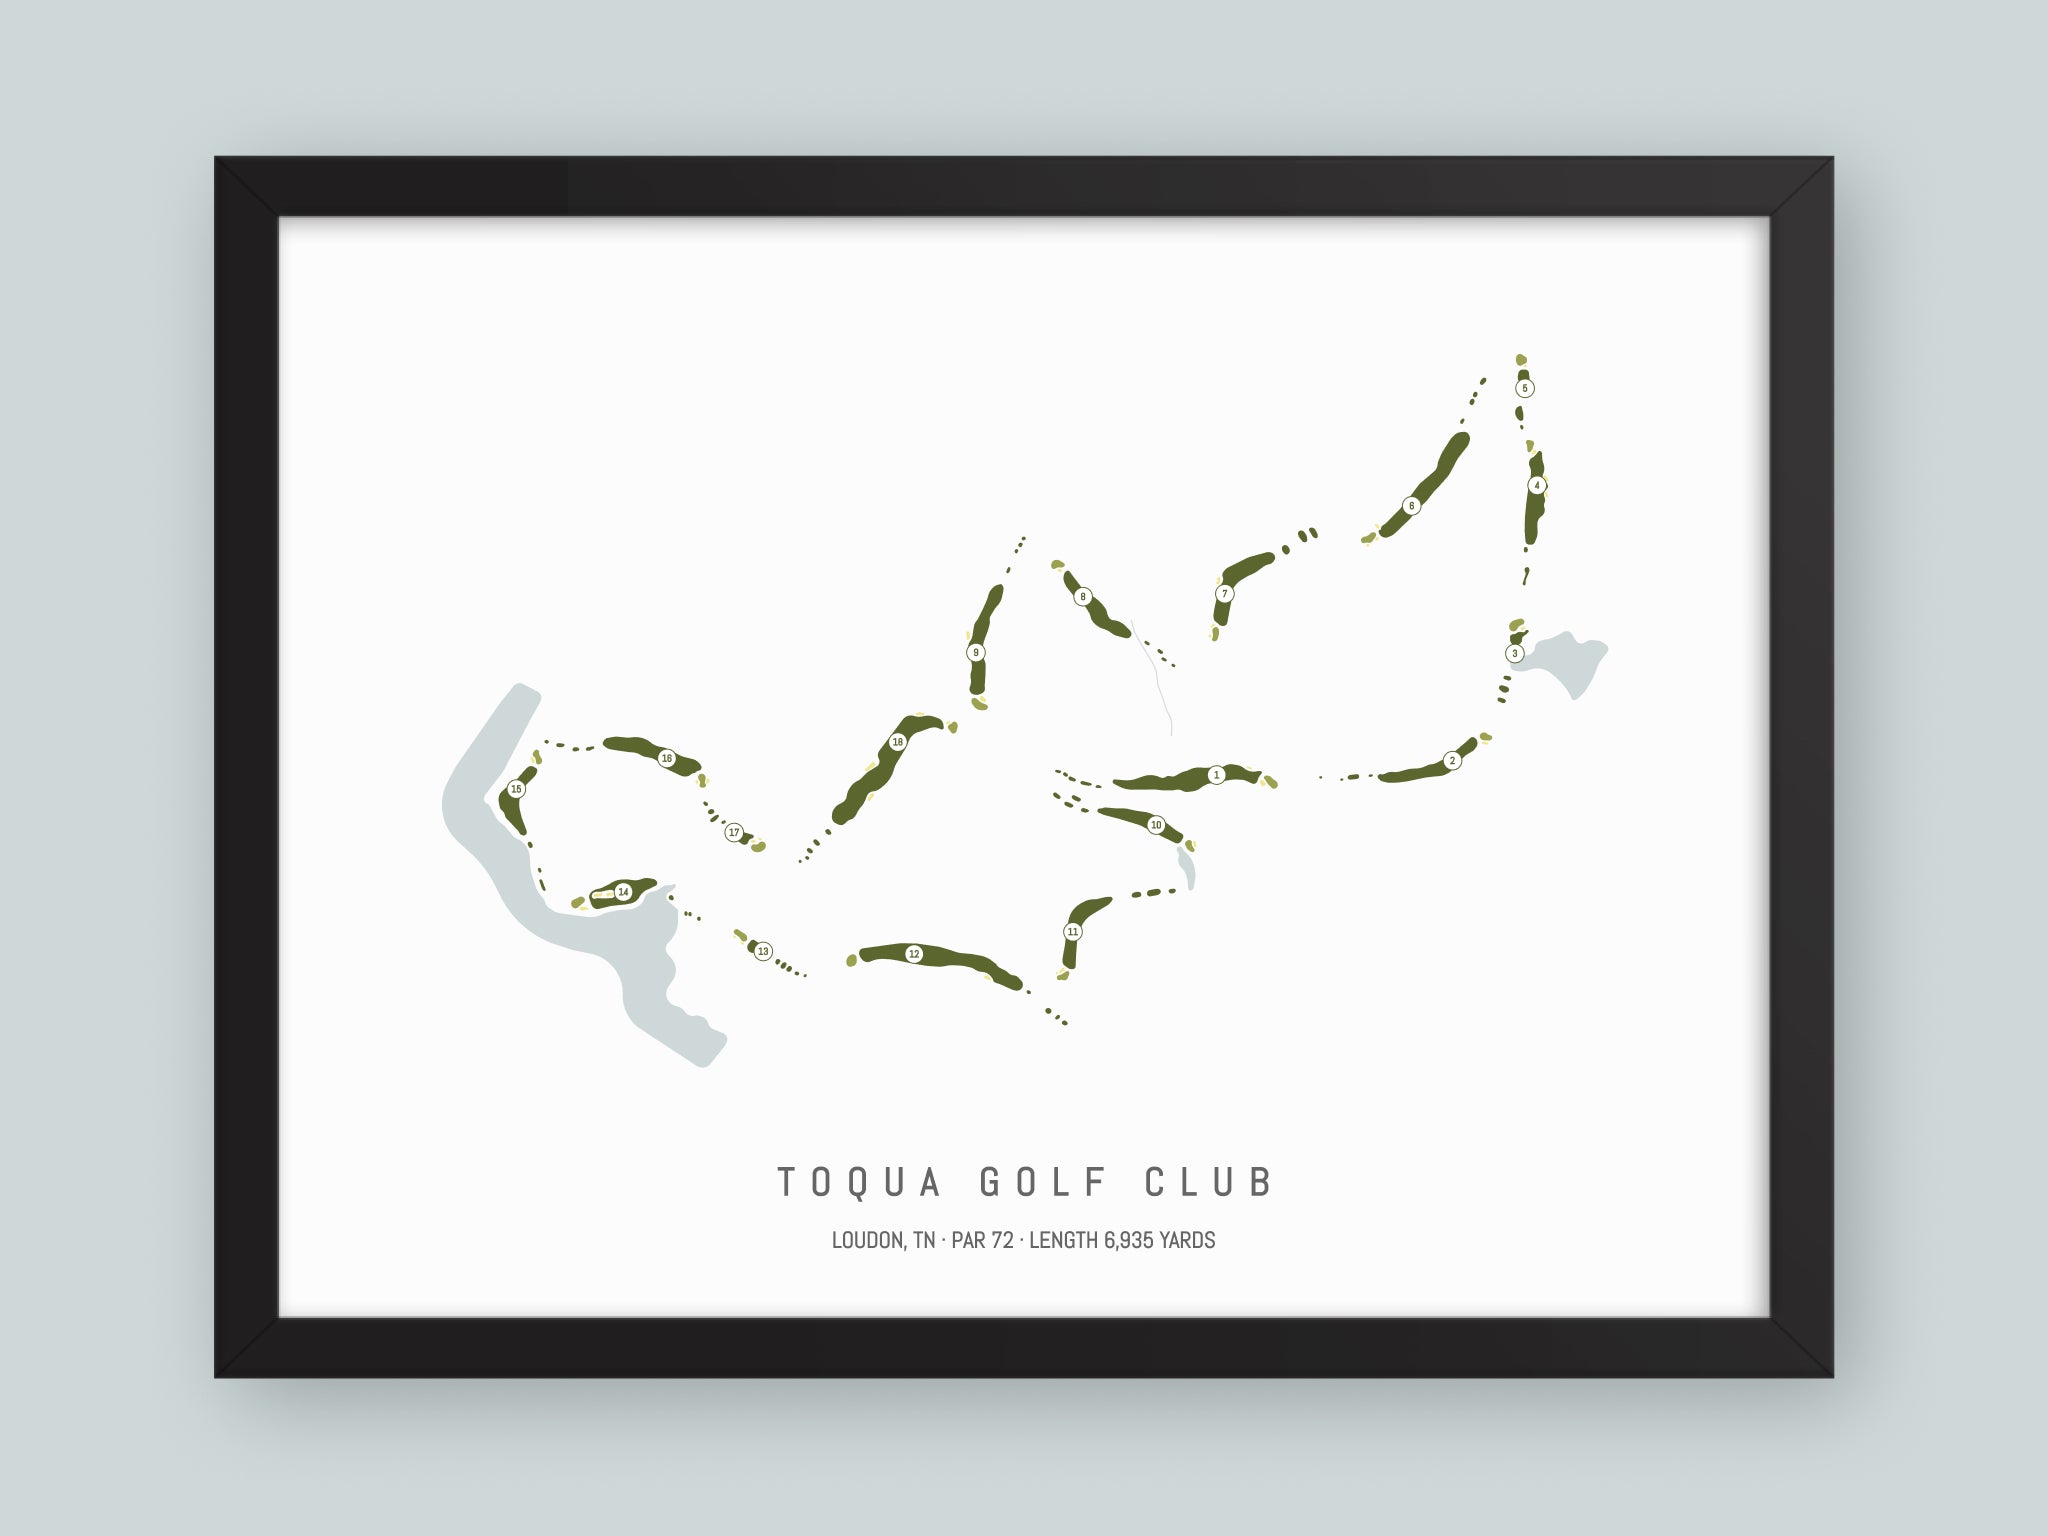 Toqua-Golf-Club-TN--Black-Frame-24x18-With-Hole-Numbers